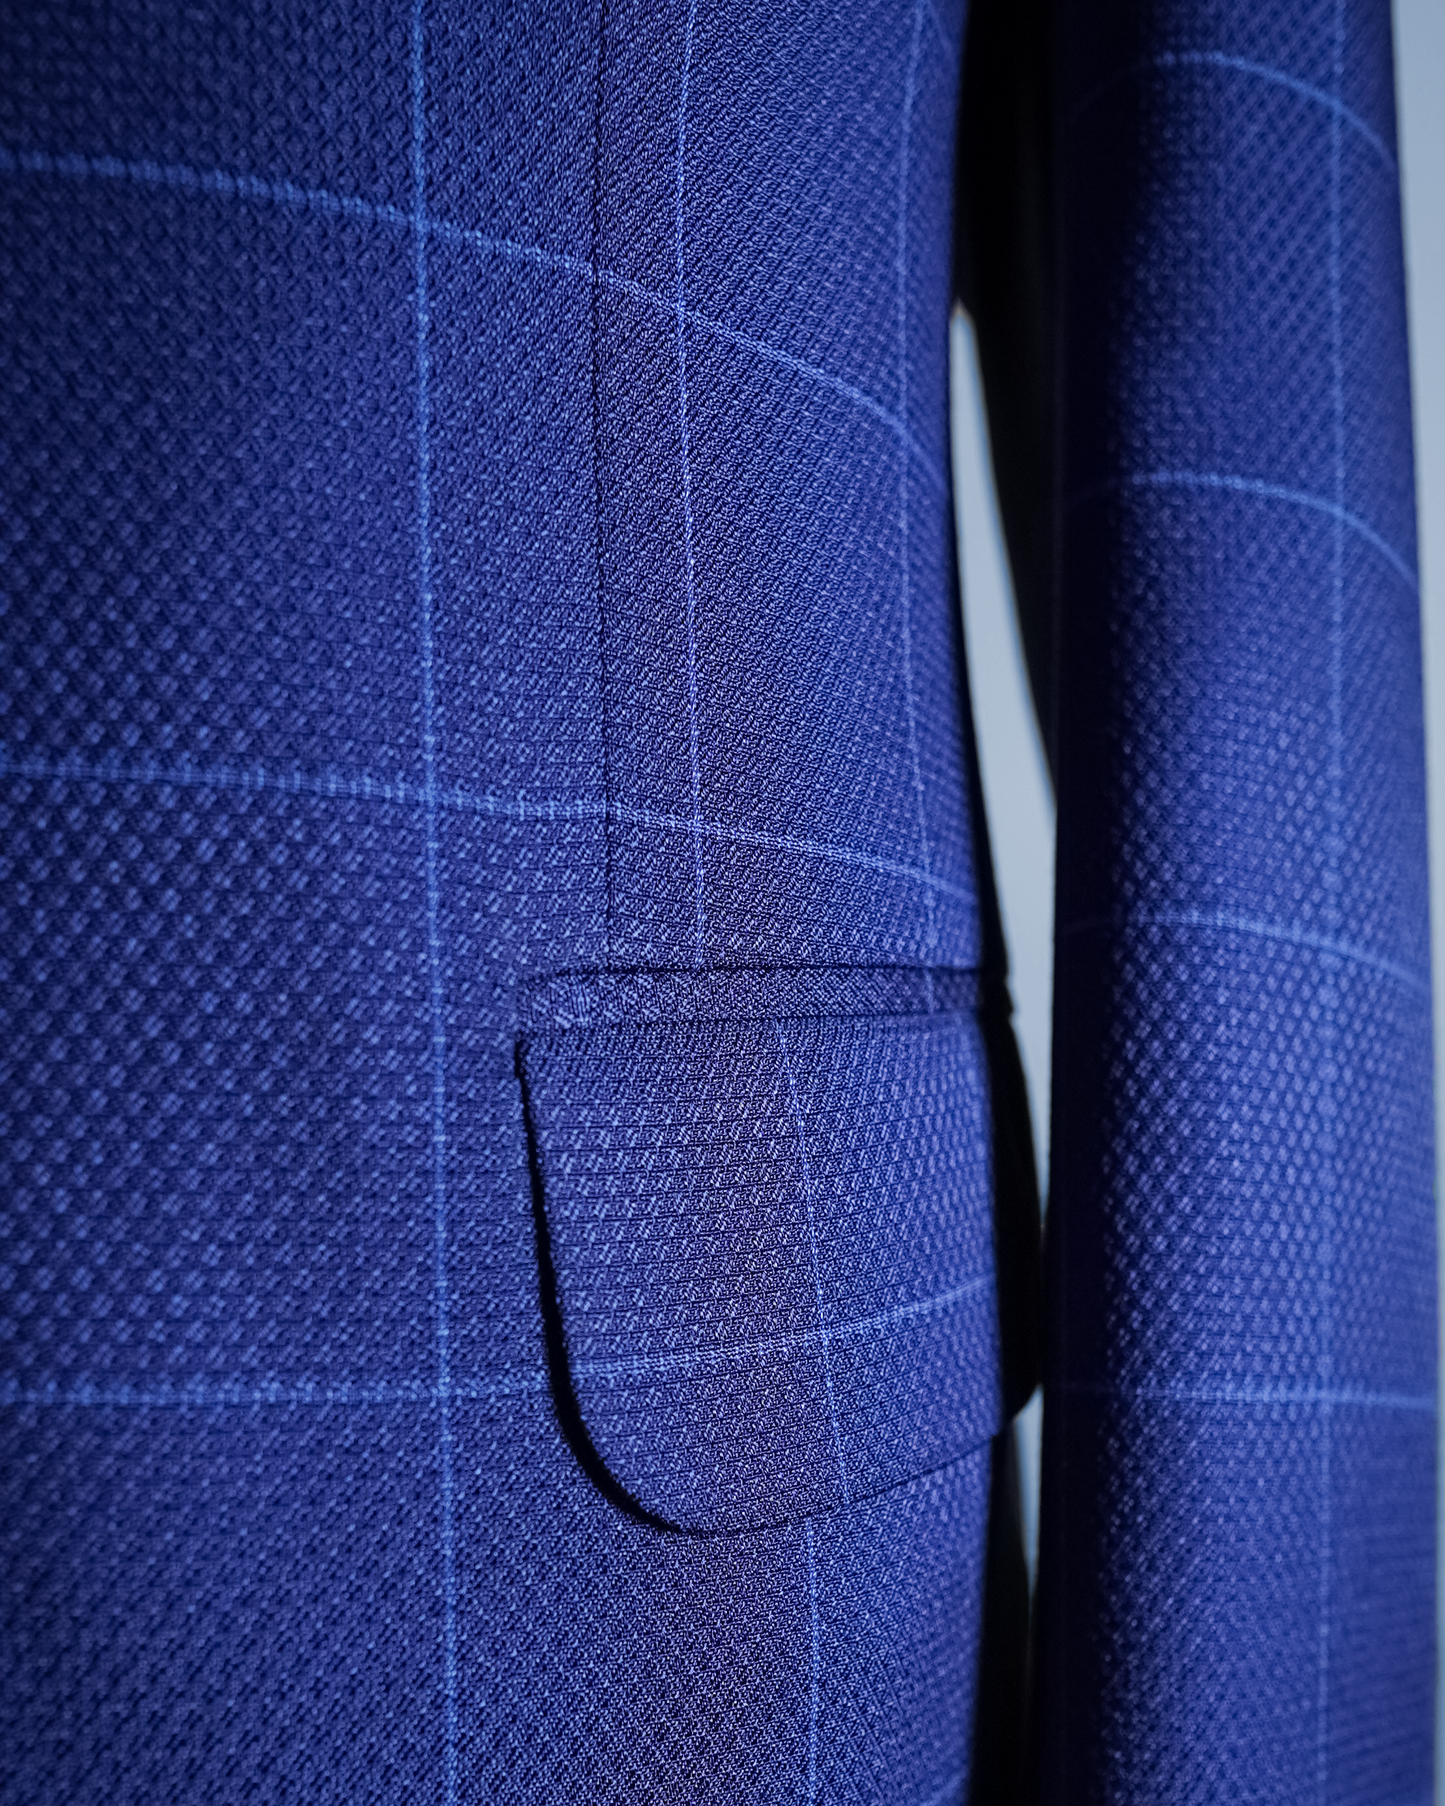 Blue Check Bespoke Suit